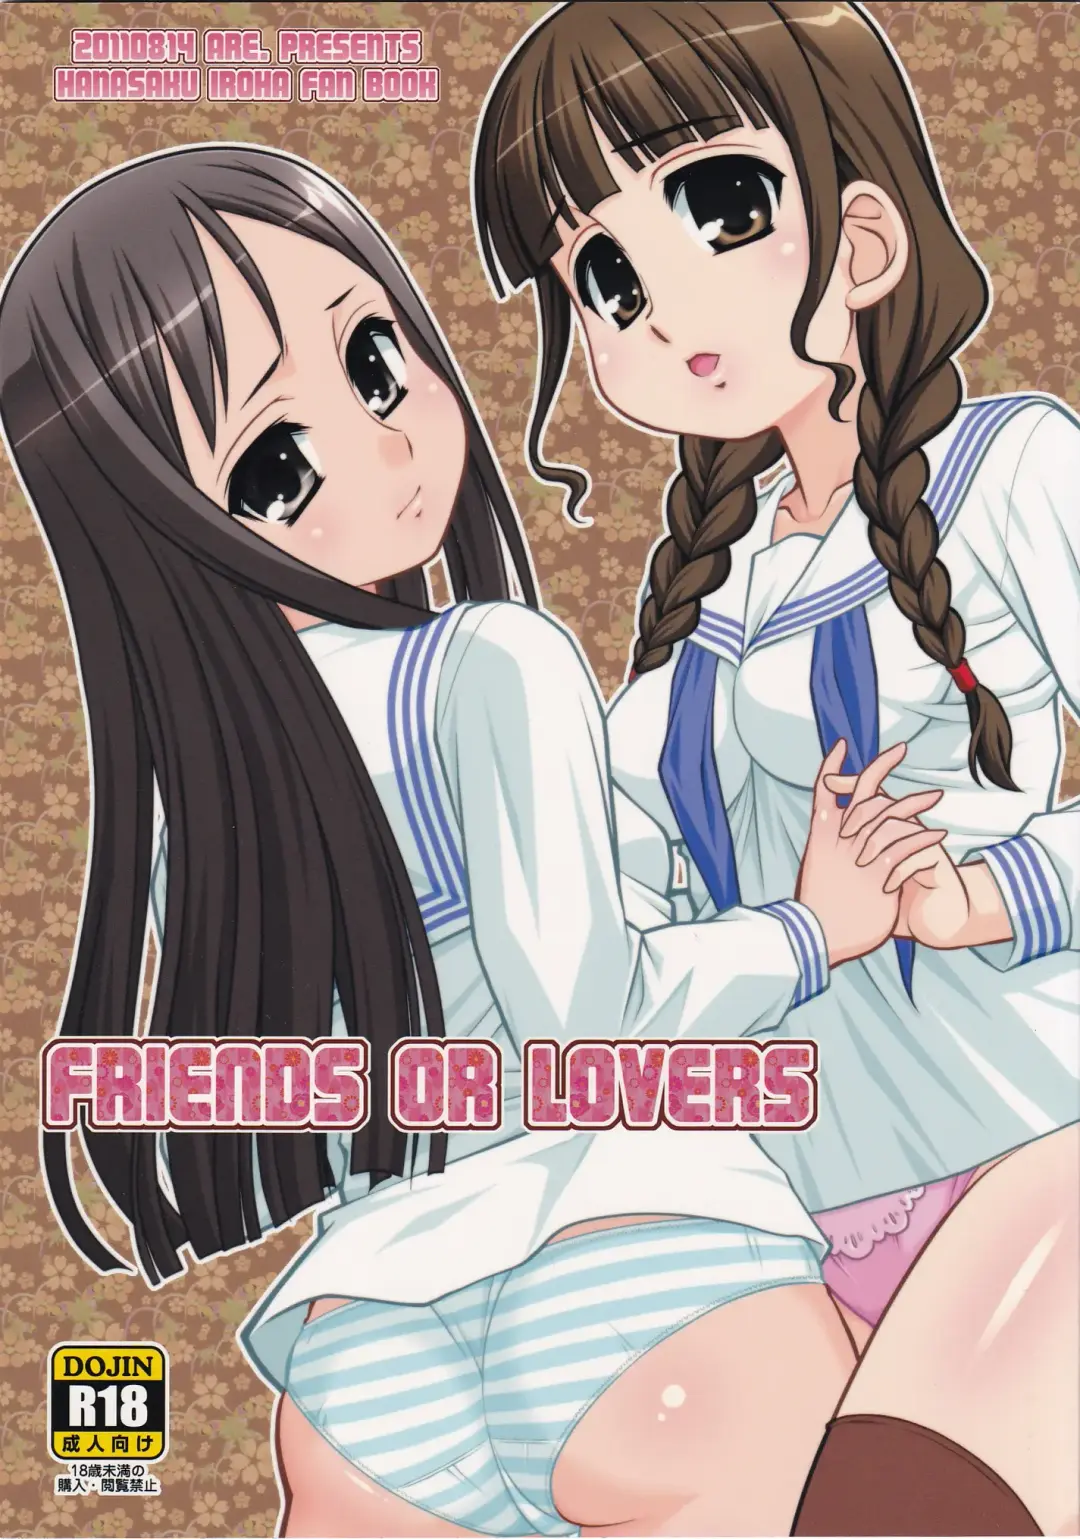 Read [Harukaze Do-jin] FRIENDS OR LOVERS - Fhentai.net